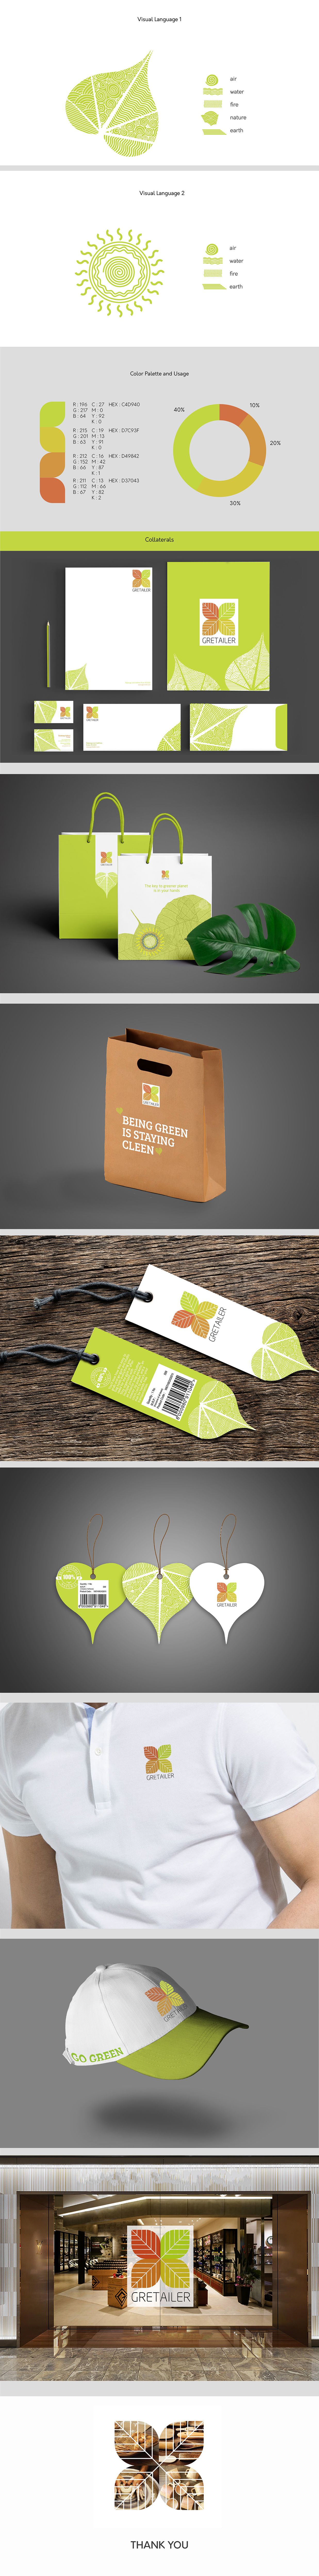 eco friendly branding  green eco friendly store leaf logo business idea